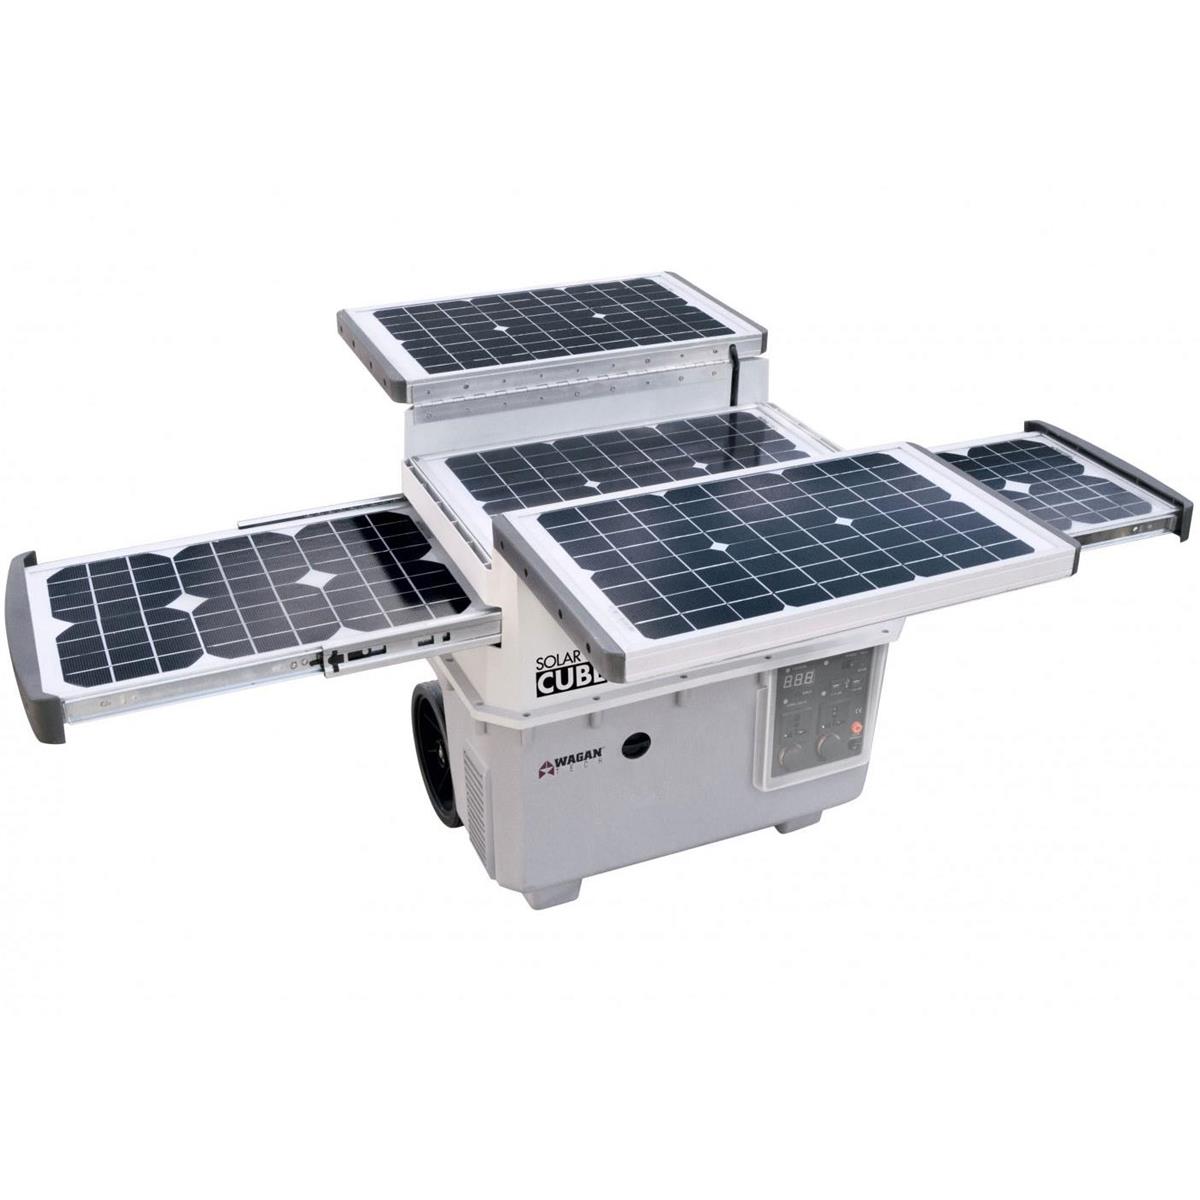 Image of Wagan Solar e Power Cube 1500 Solar Generator